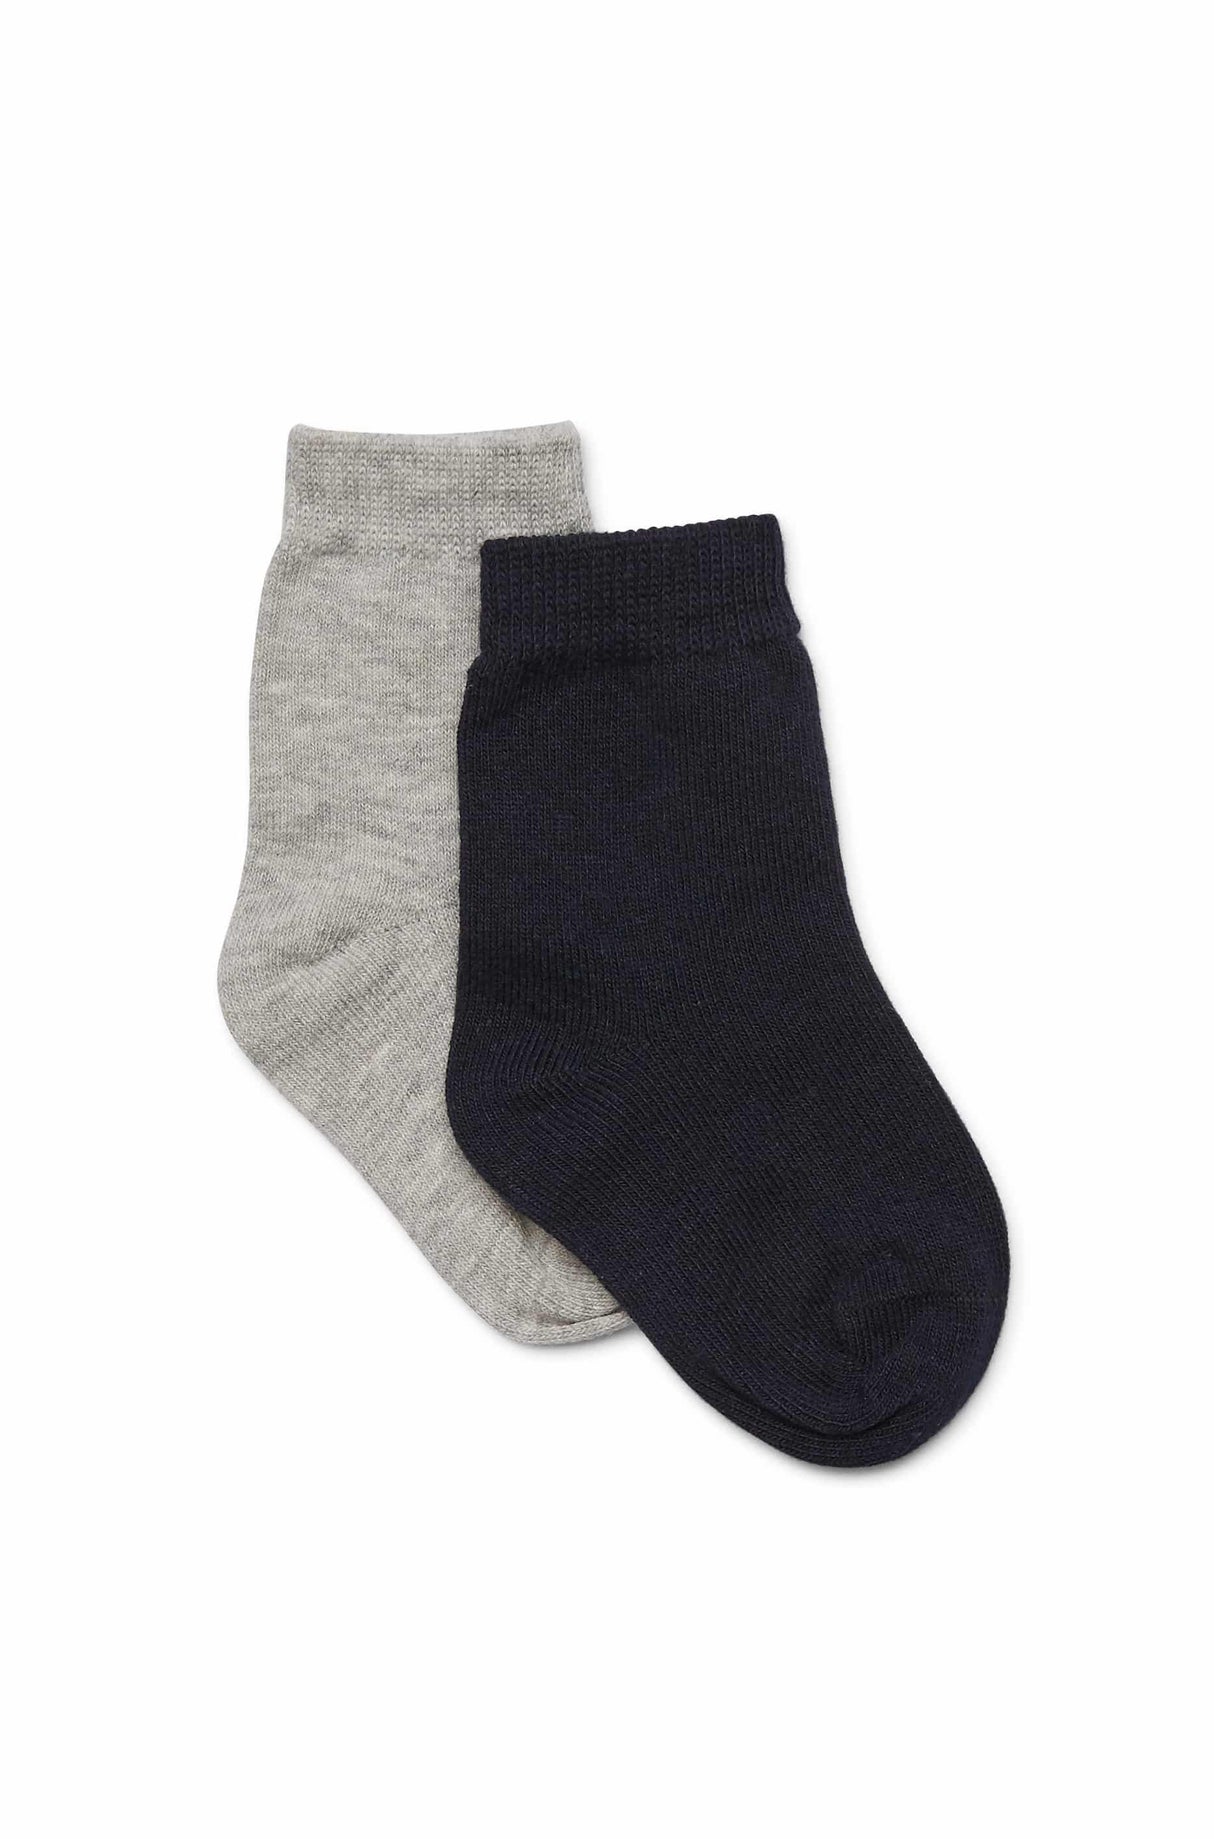 Navy and grey small baby socks